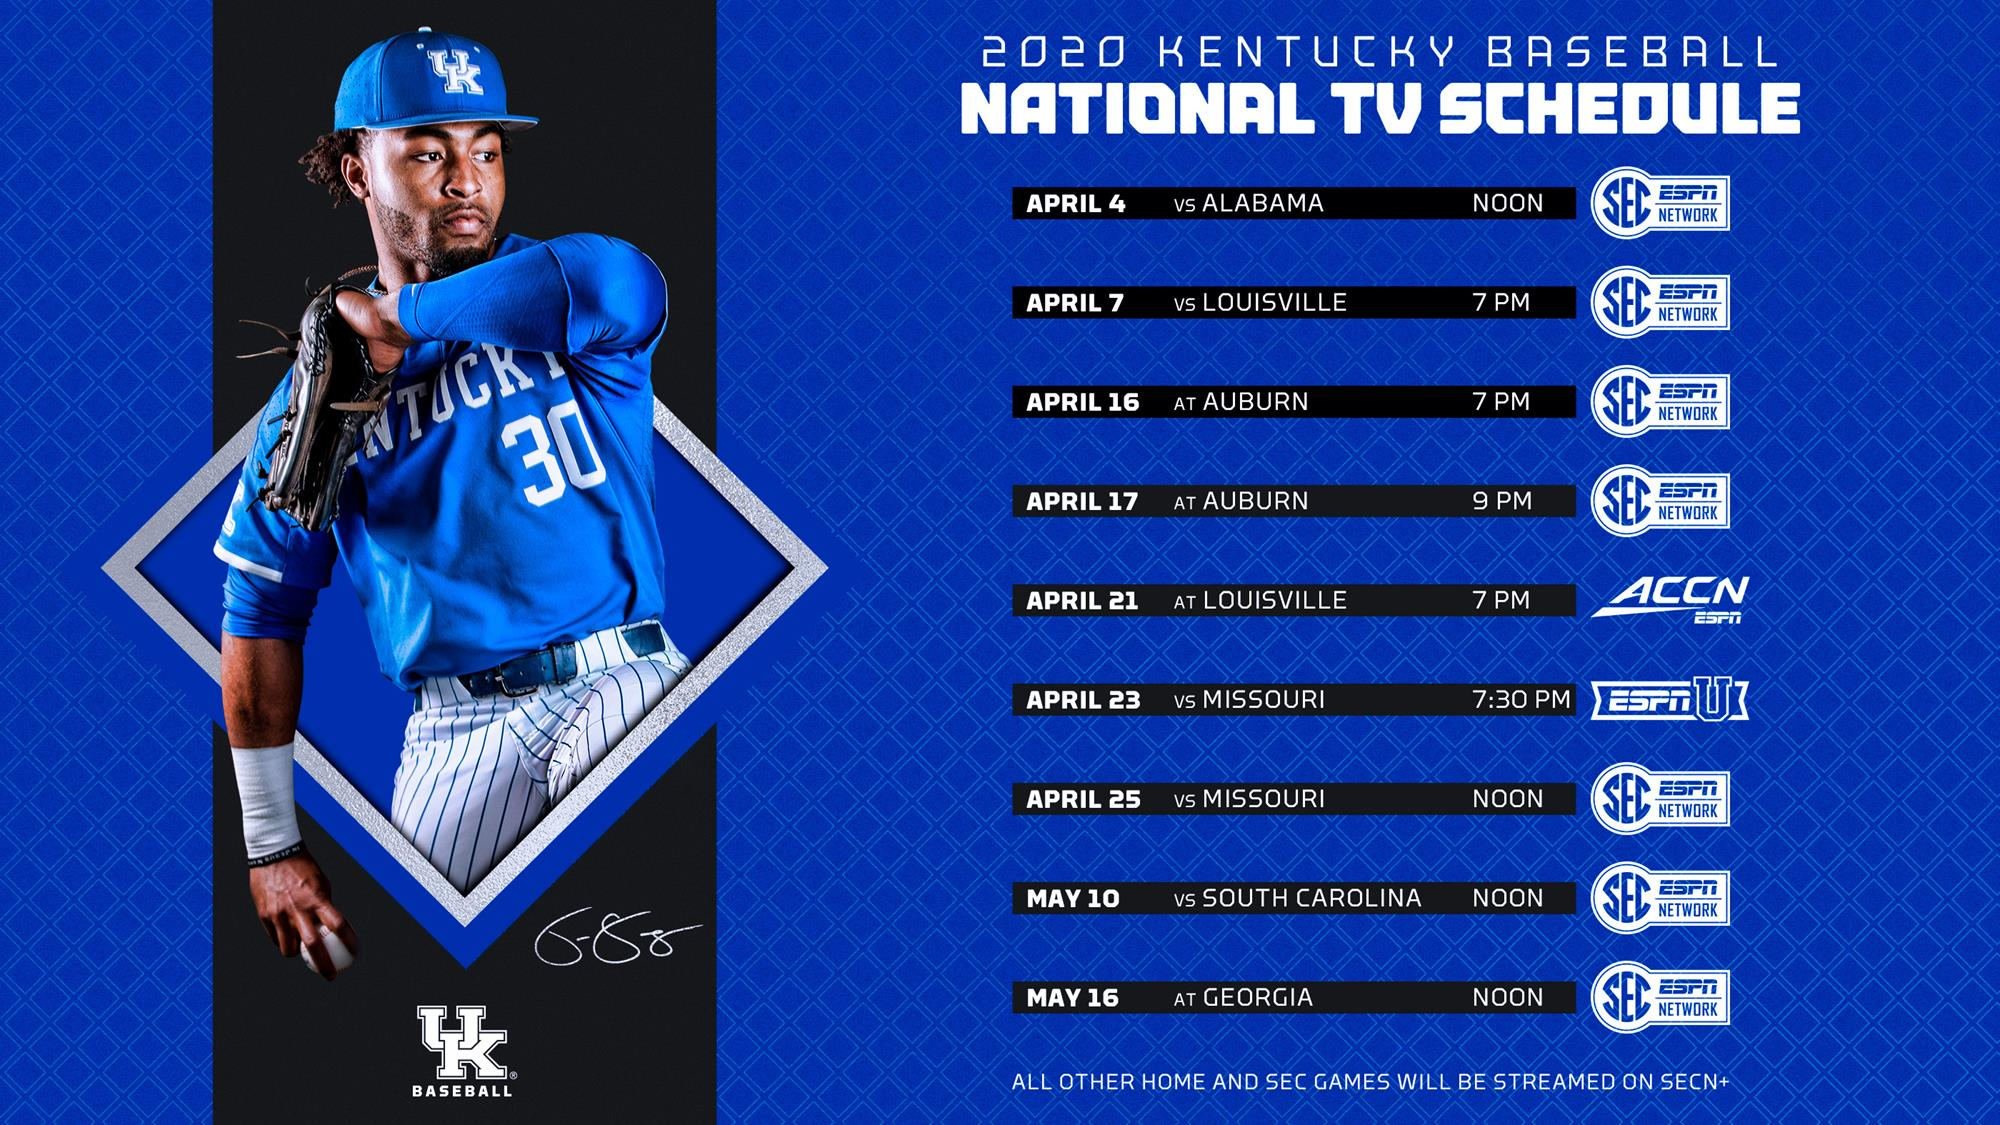 Kentucky Baseball to Appear Nine Times on National TV